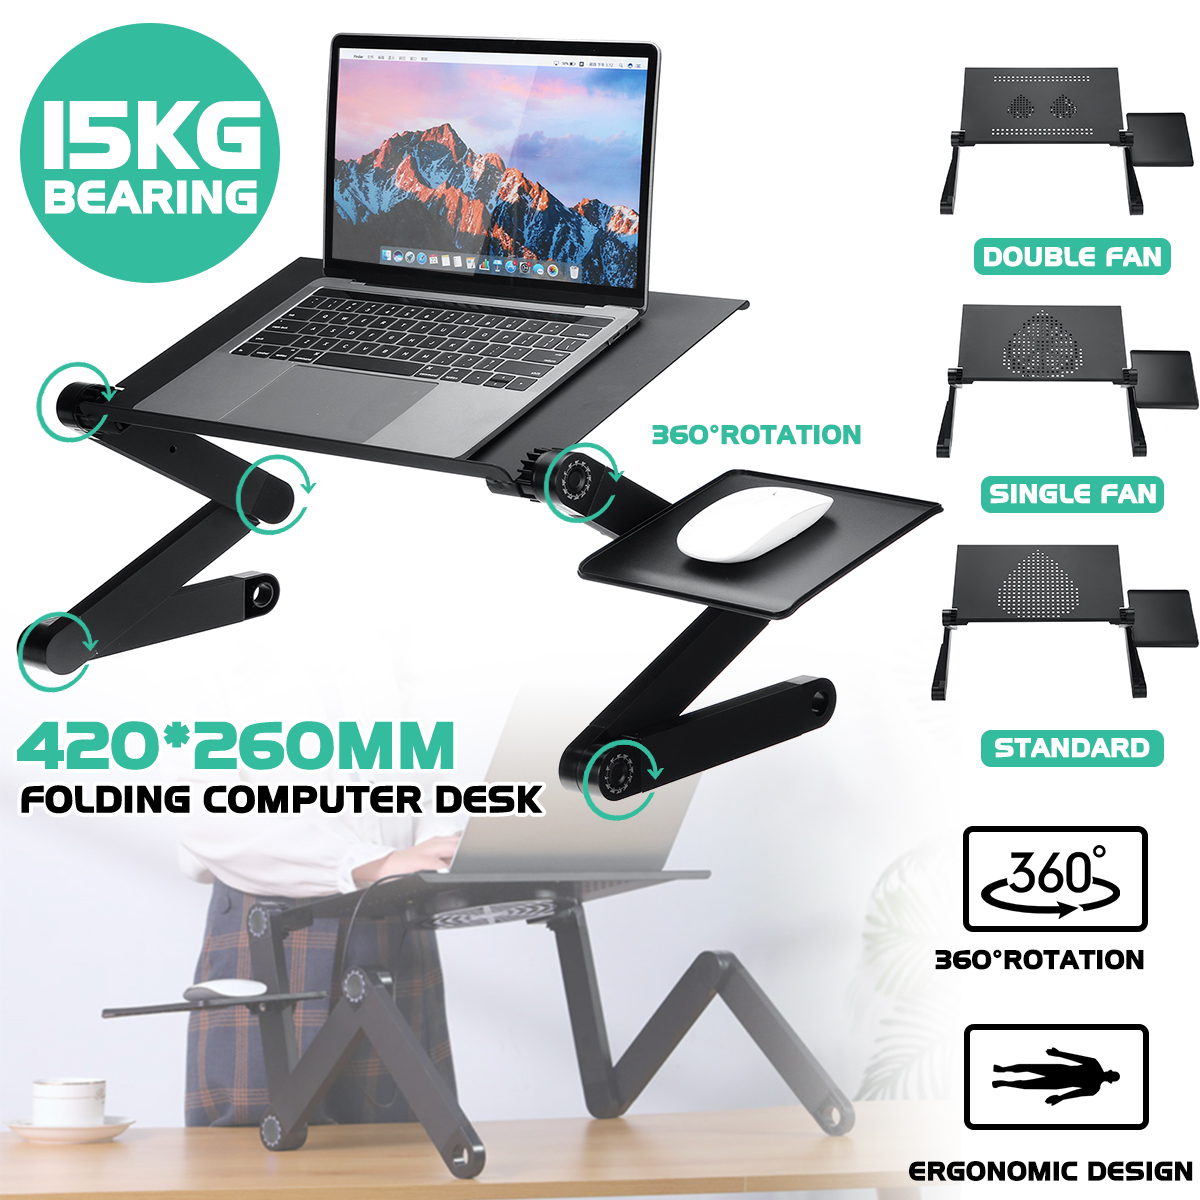 360deg-Adjustable-Laptop-Desk-Foldable-Portable-Laptop-Stand-Color-Black-1814801-1